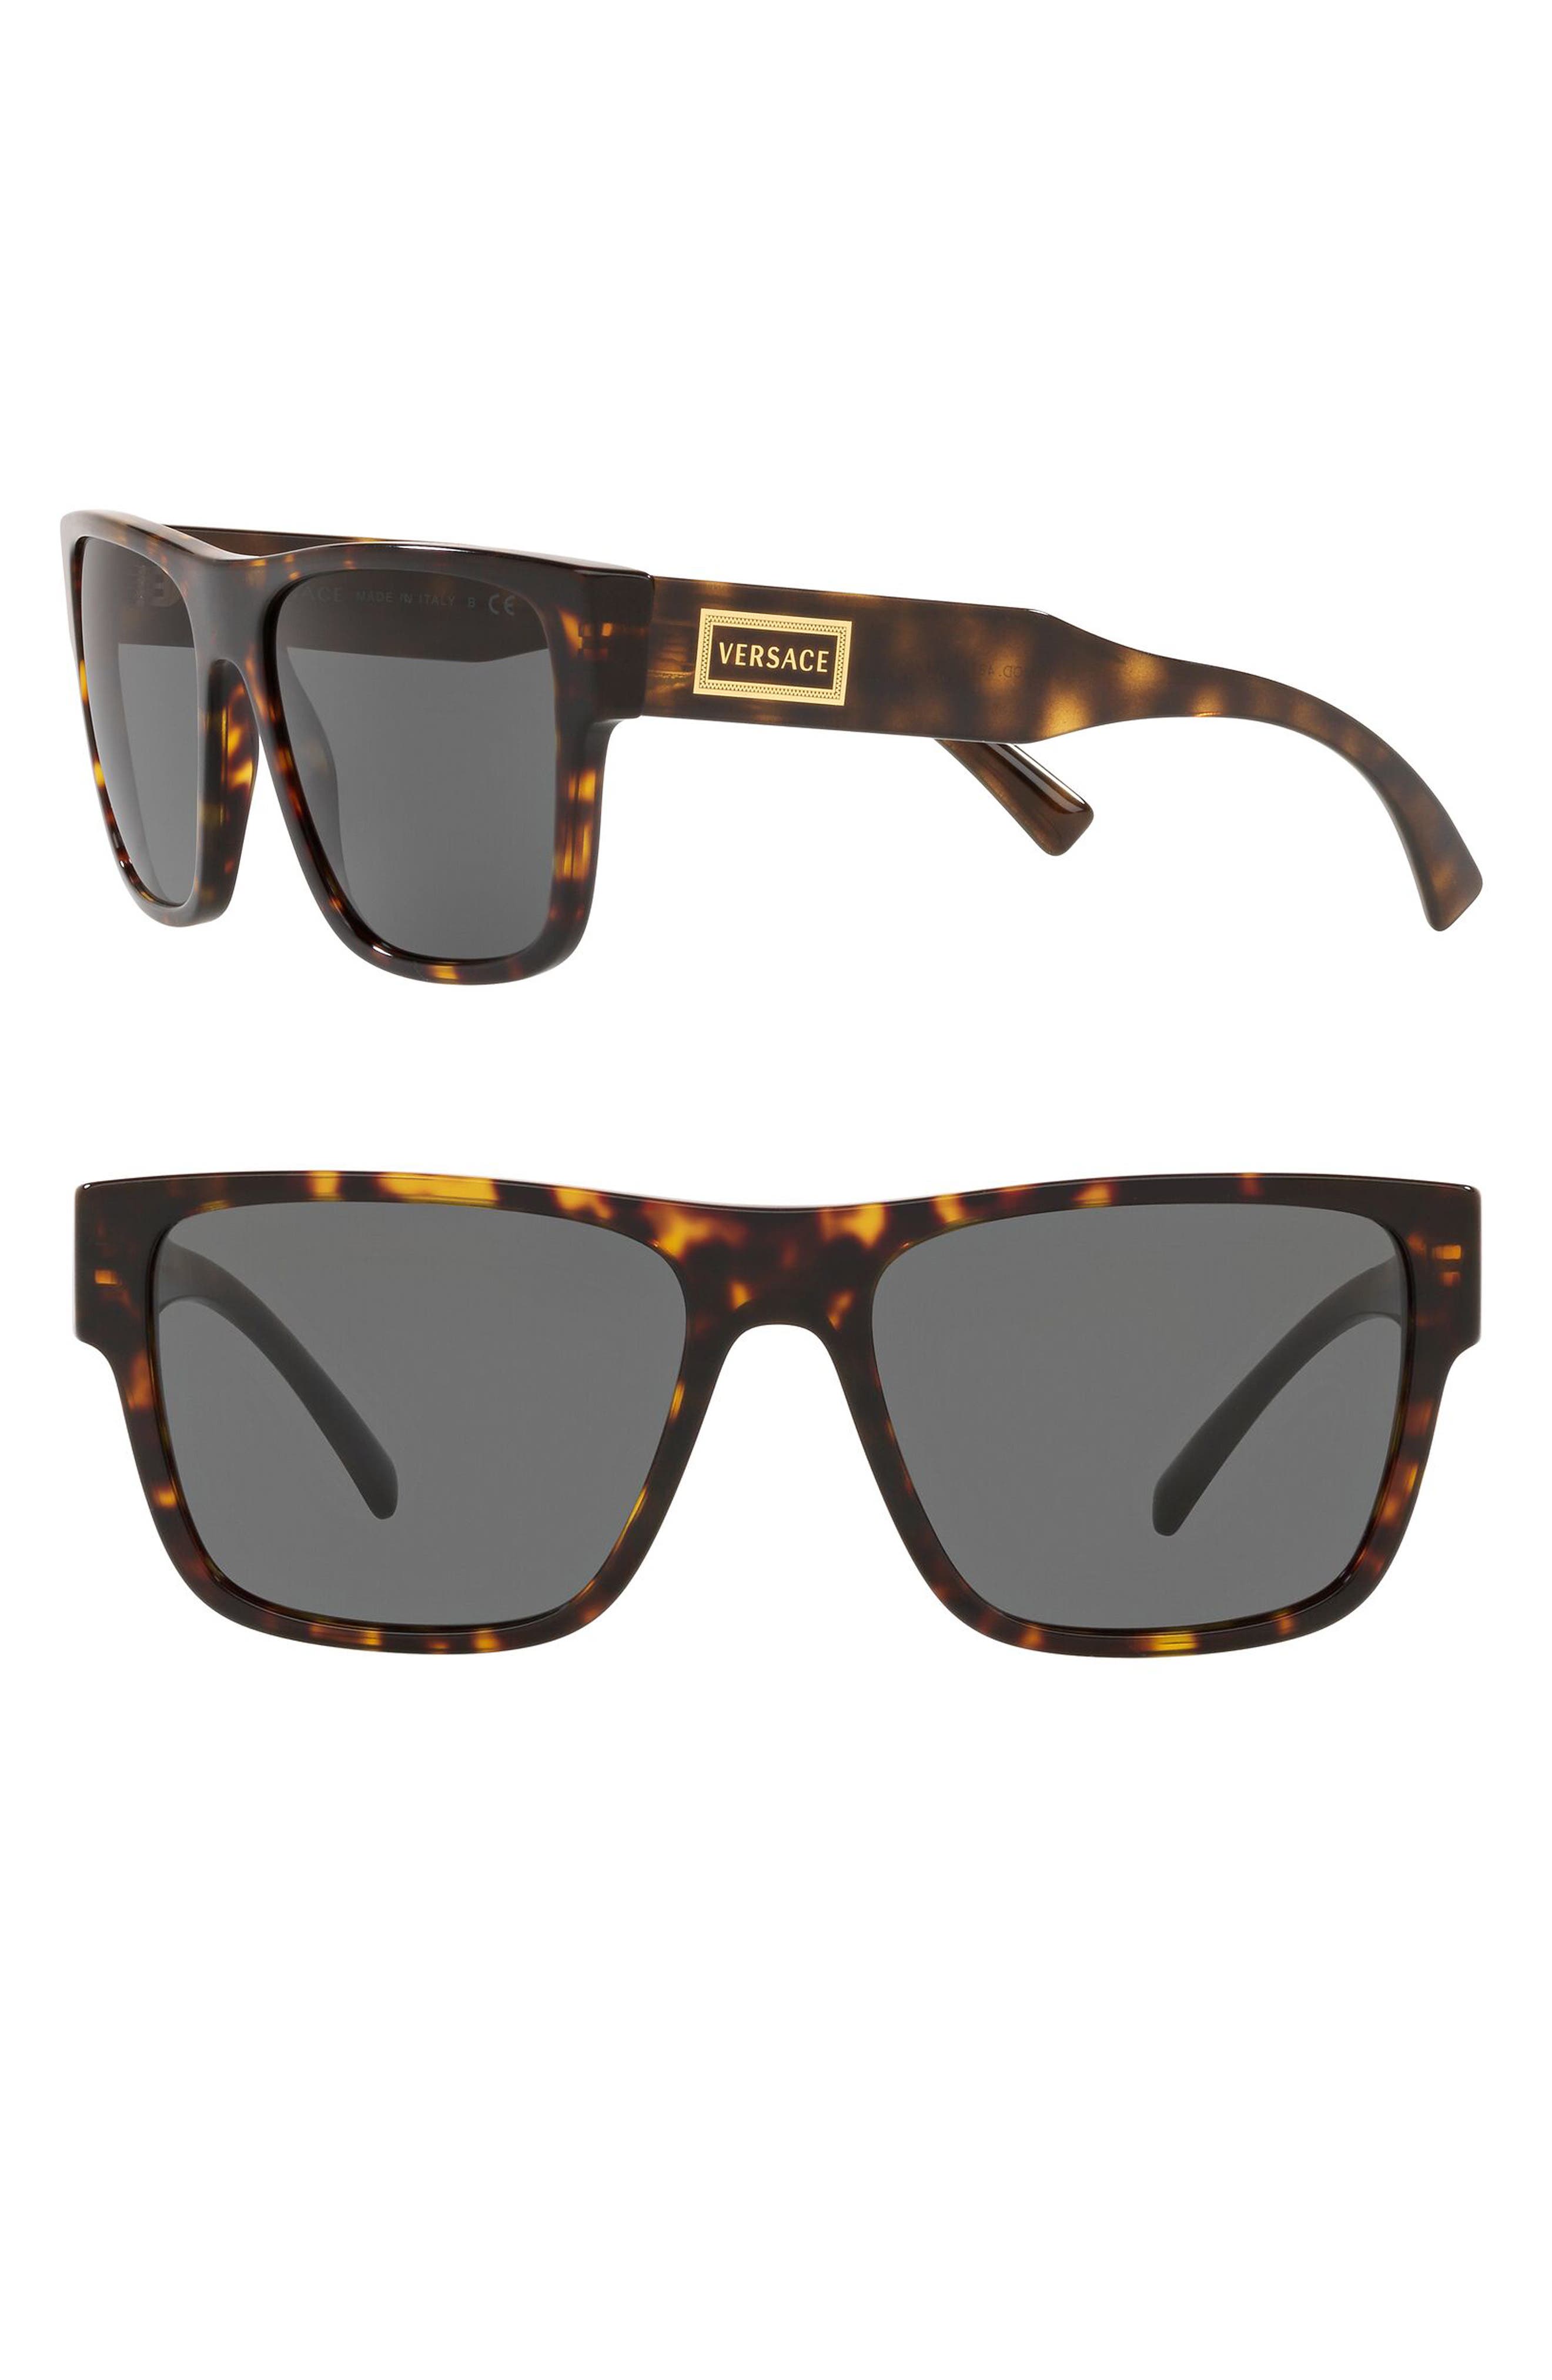 square & rectangle versace sunglasses men